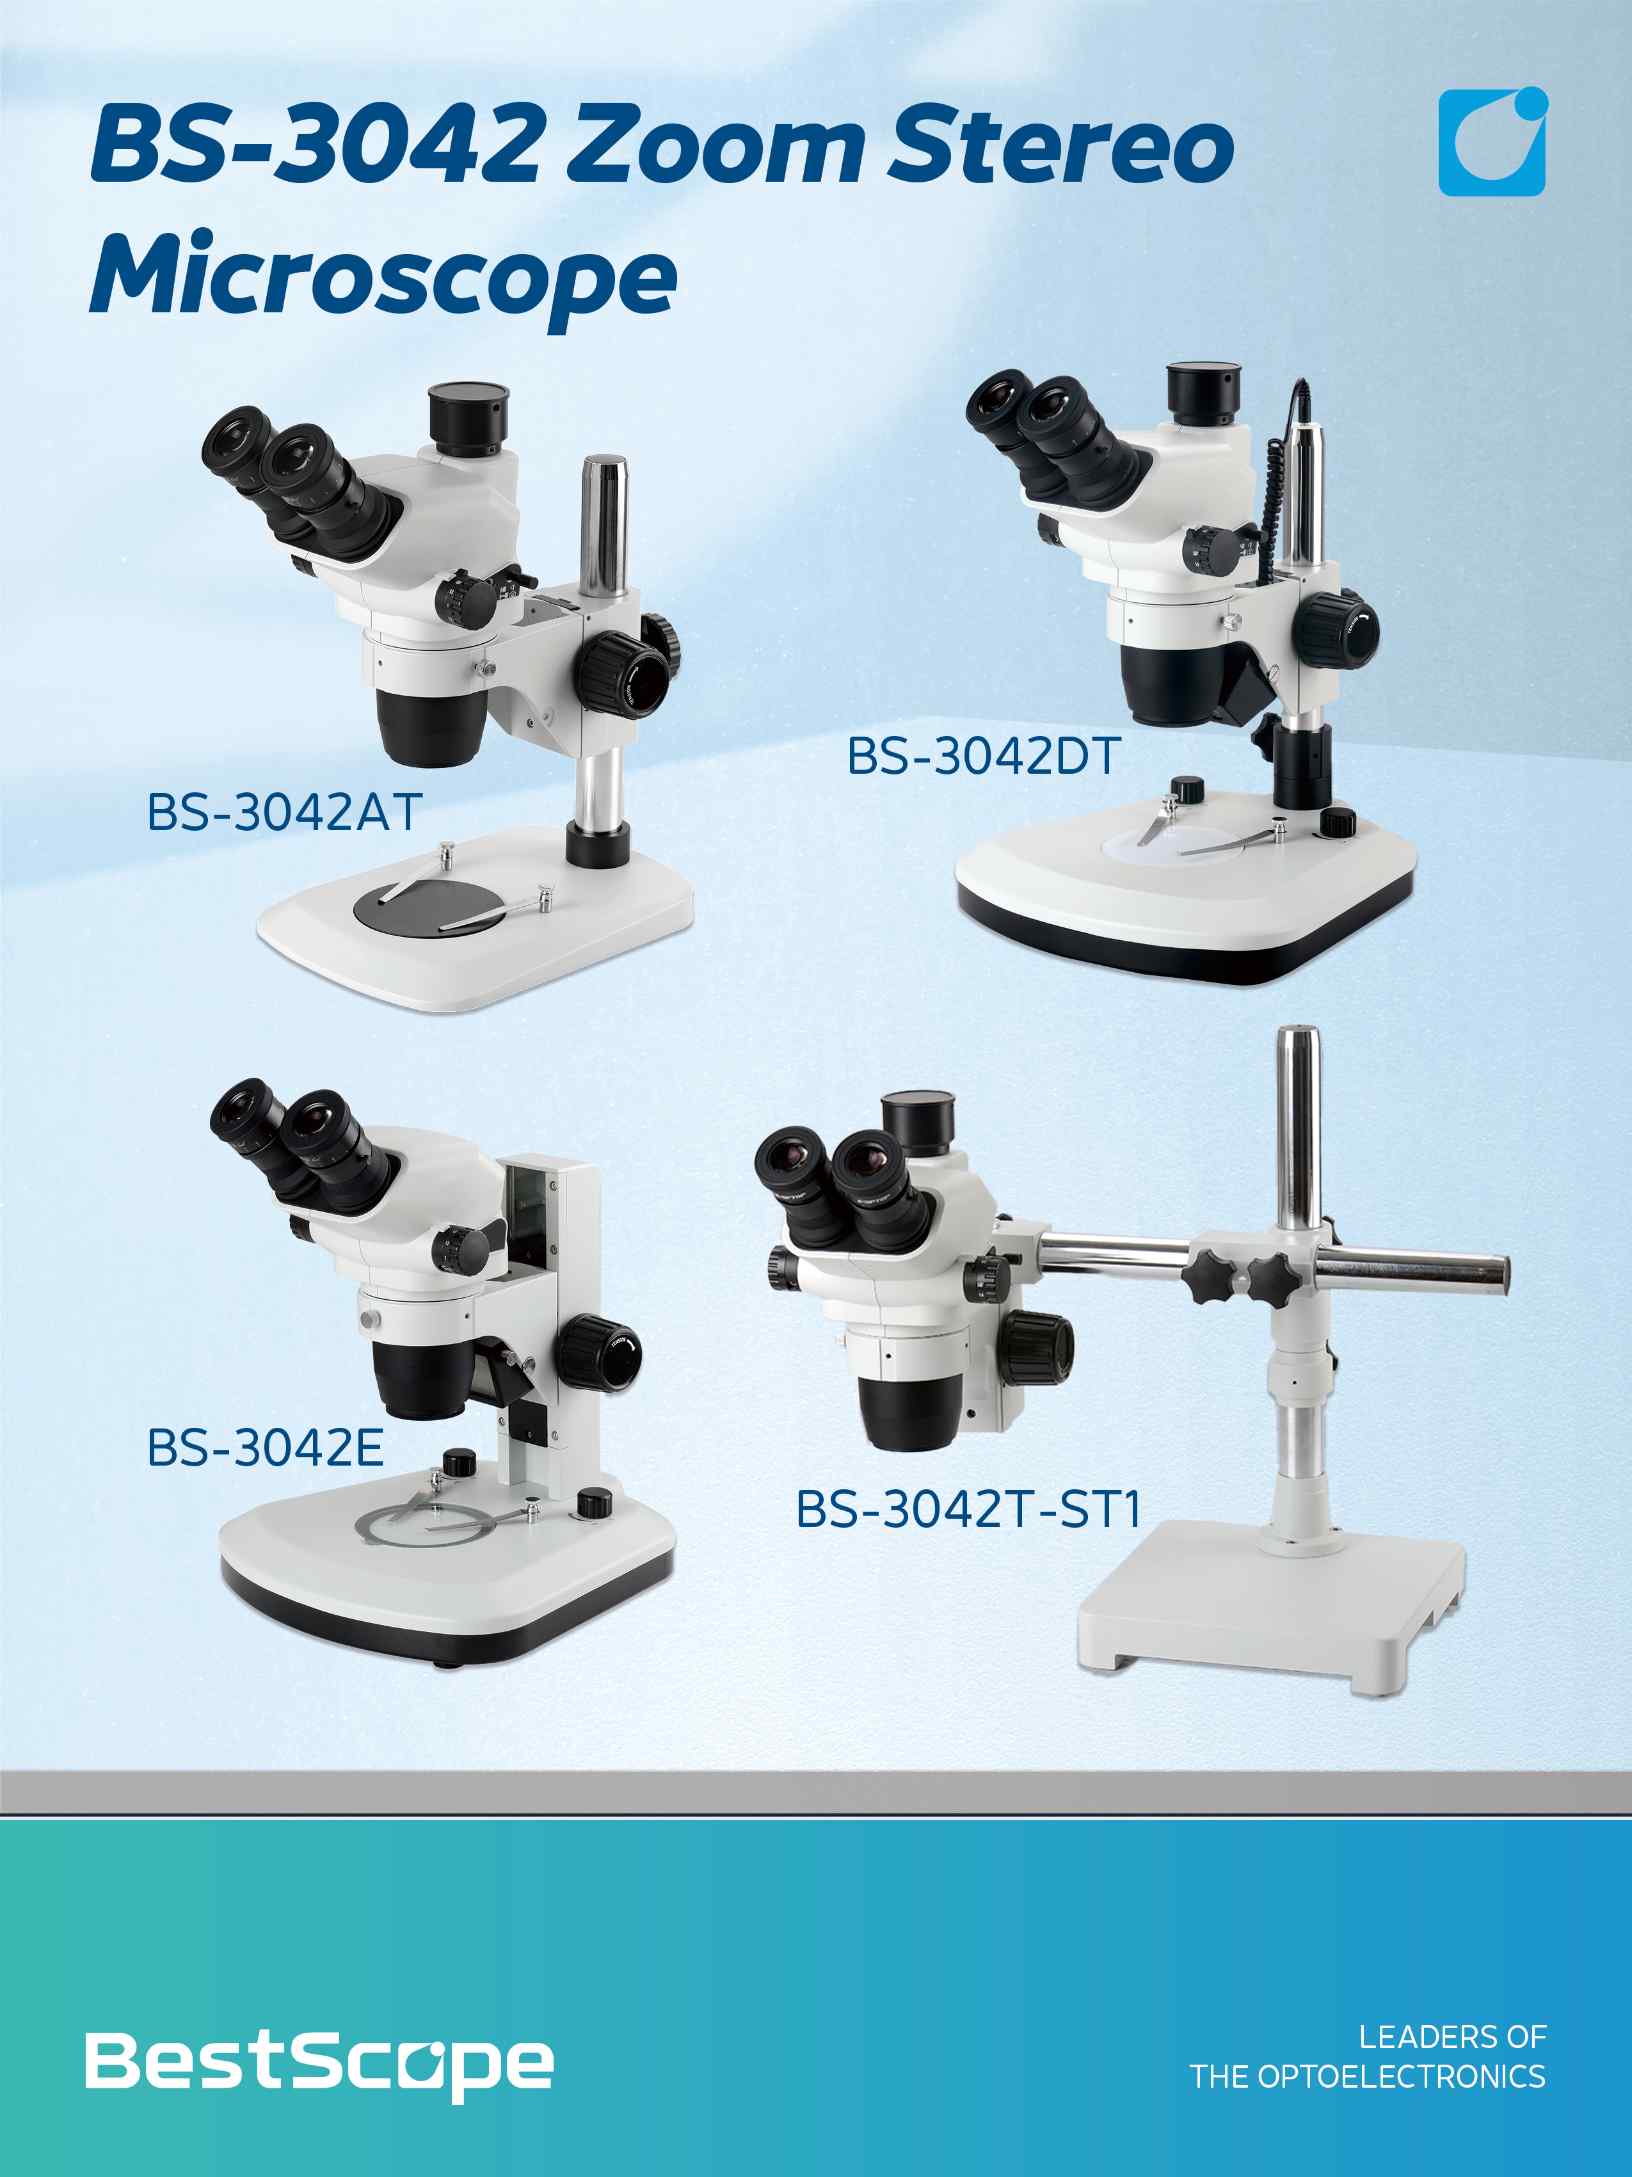 Microscopio estéreo con zoom BS-3042